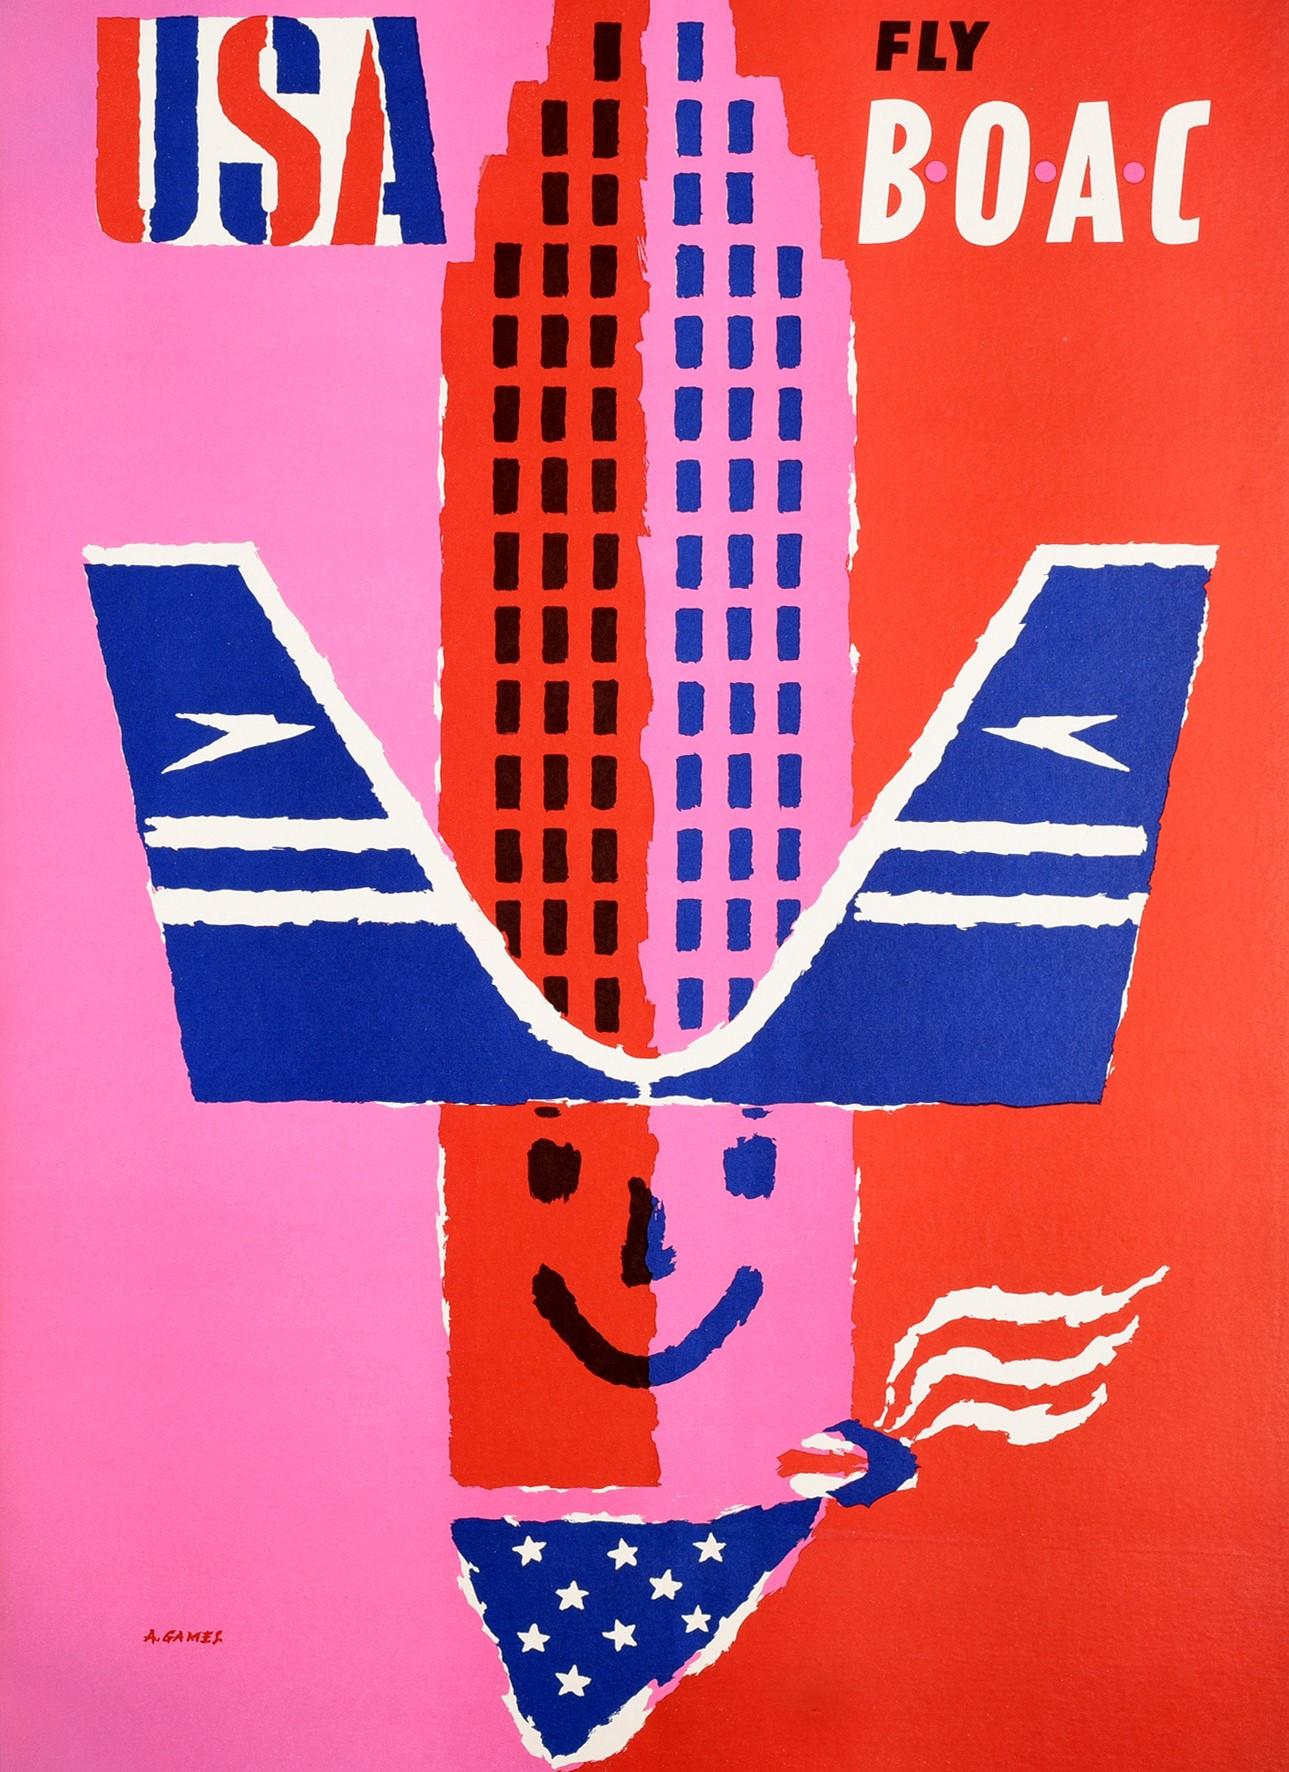 British Original Vintage Poster USA Fly BOAC Airline Travel America Midcentury Design